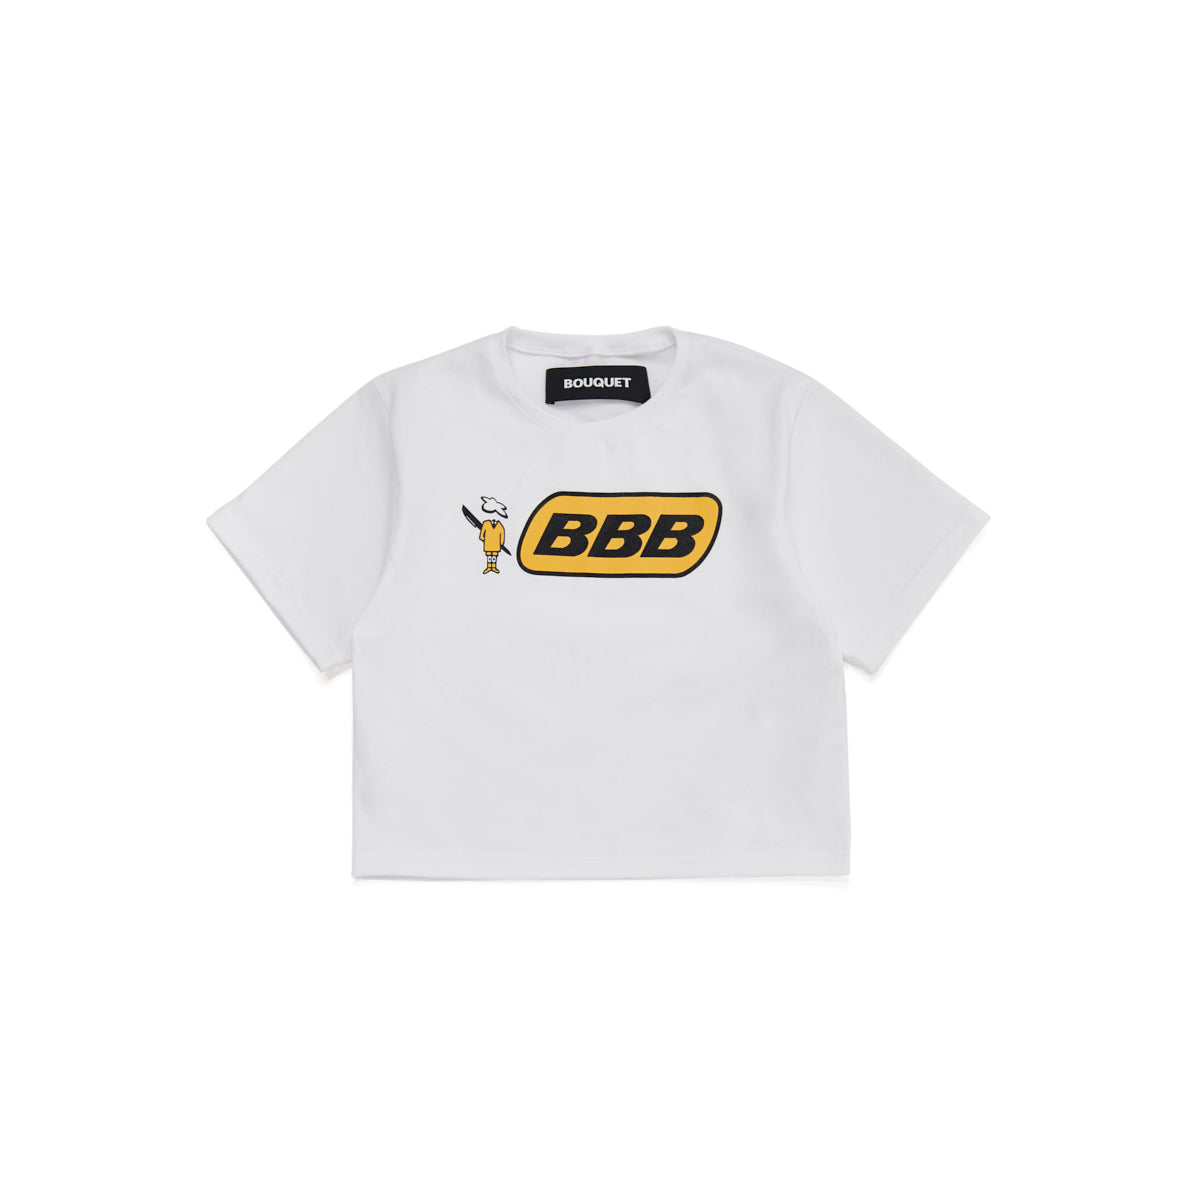 BBB Baby T-Shirt